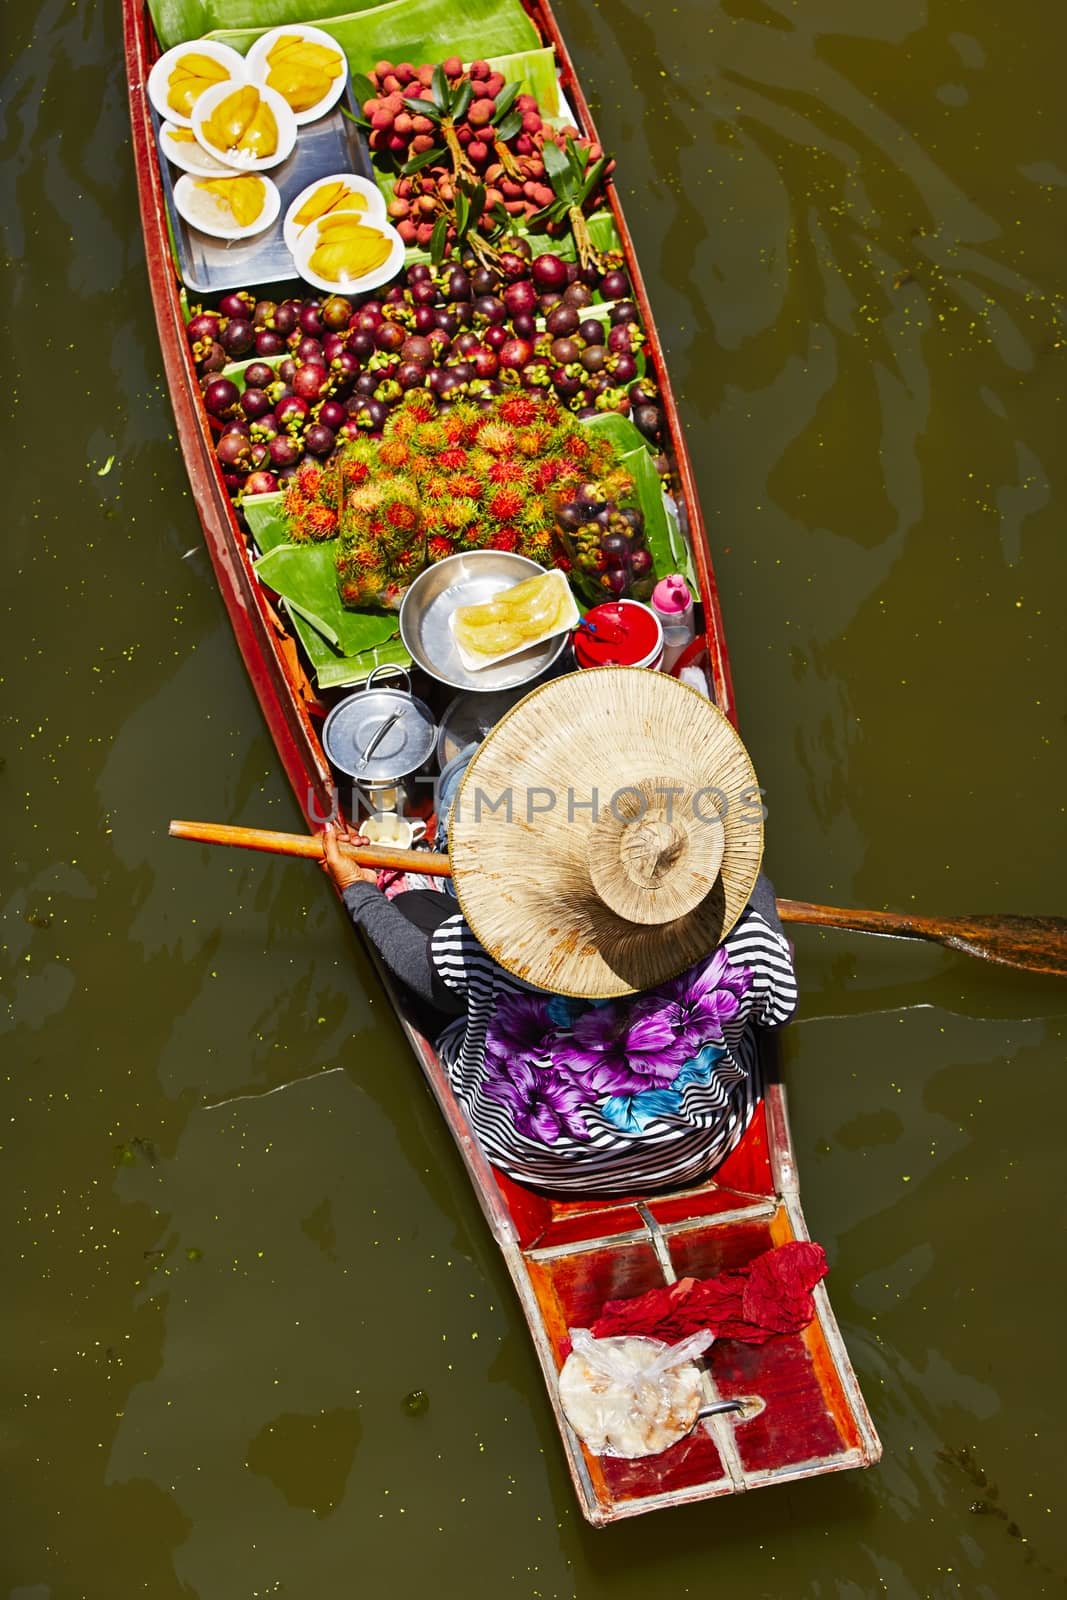 Traditional floating market in Damnoen Saduak near Bangkok